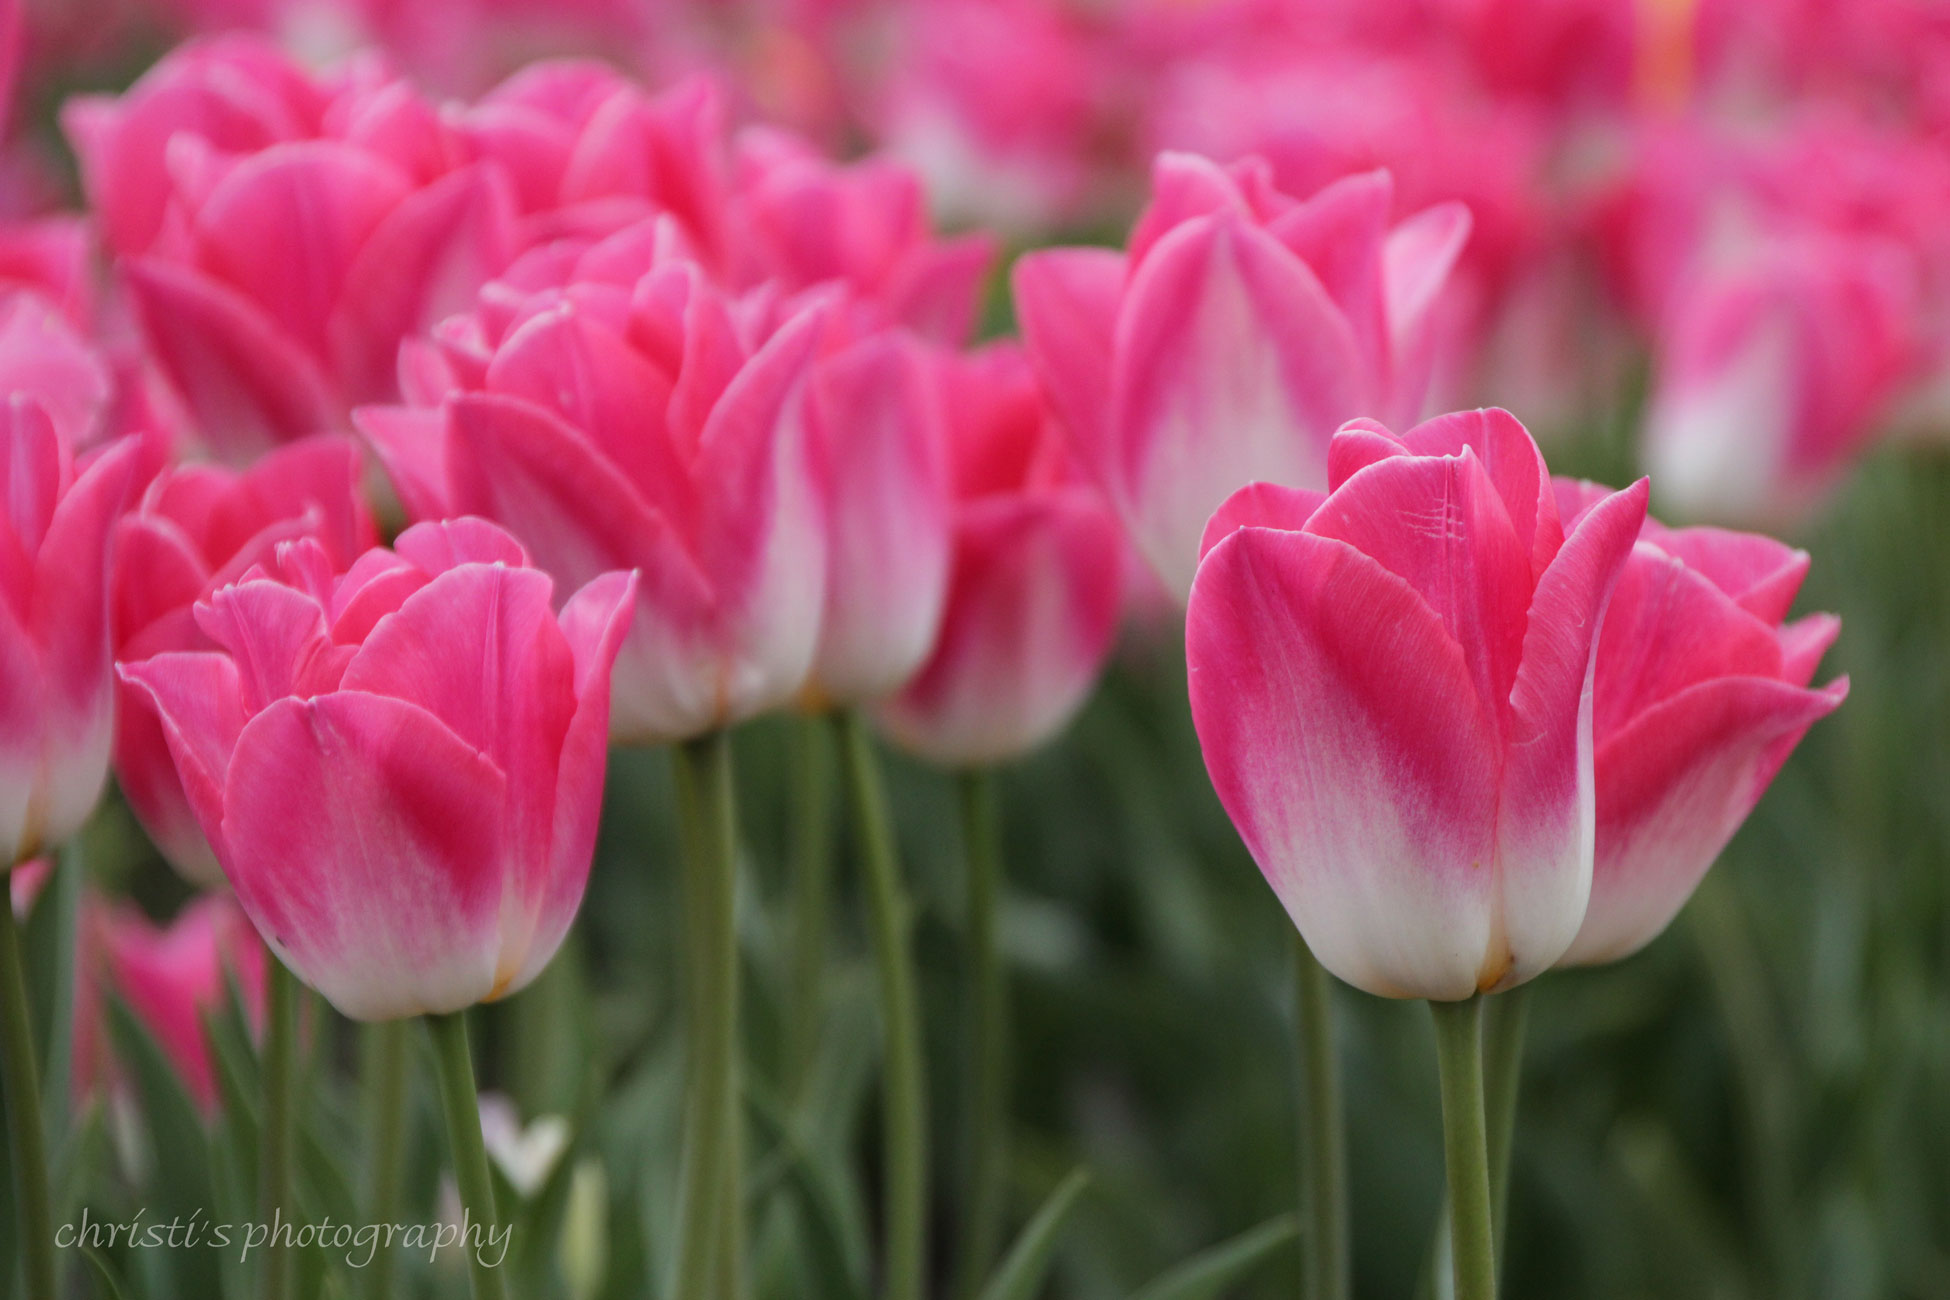 scalloped-edged-pink-tulips.jpg